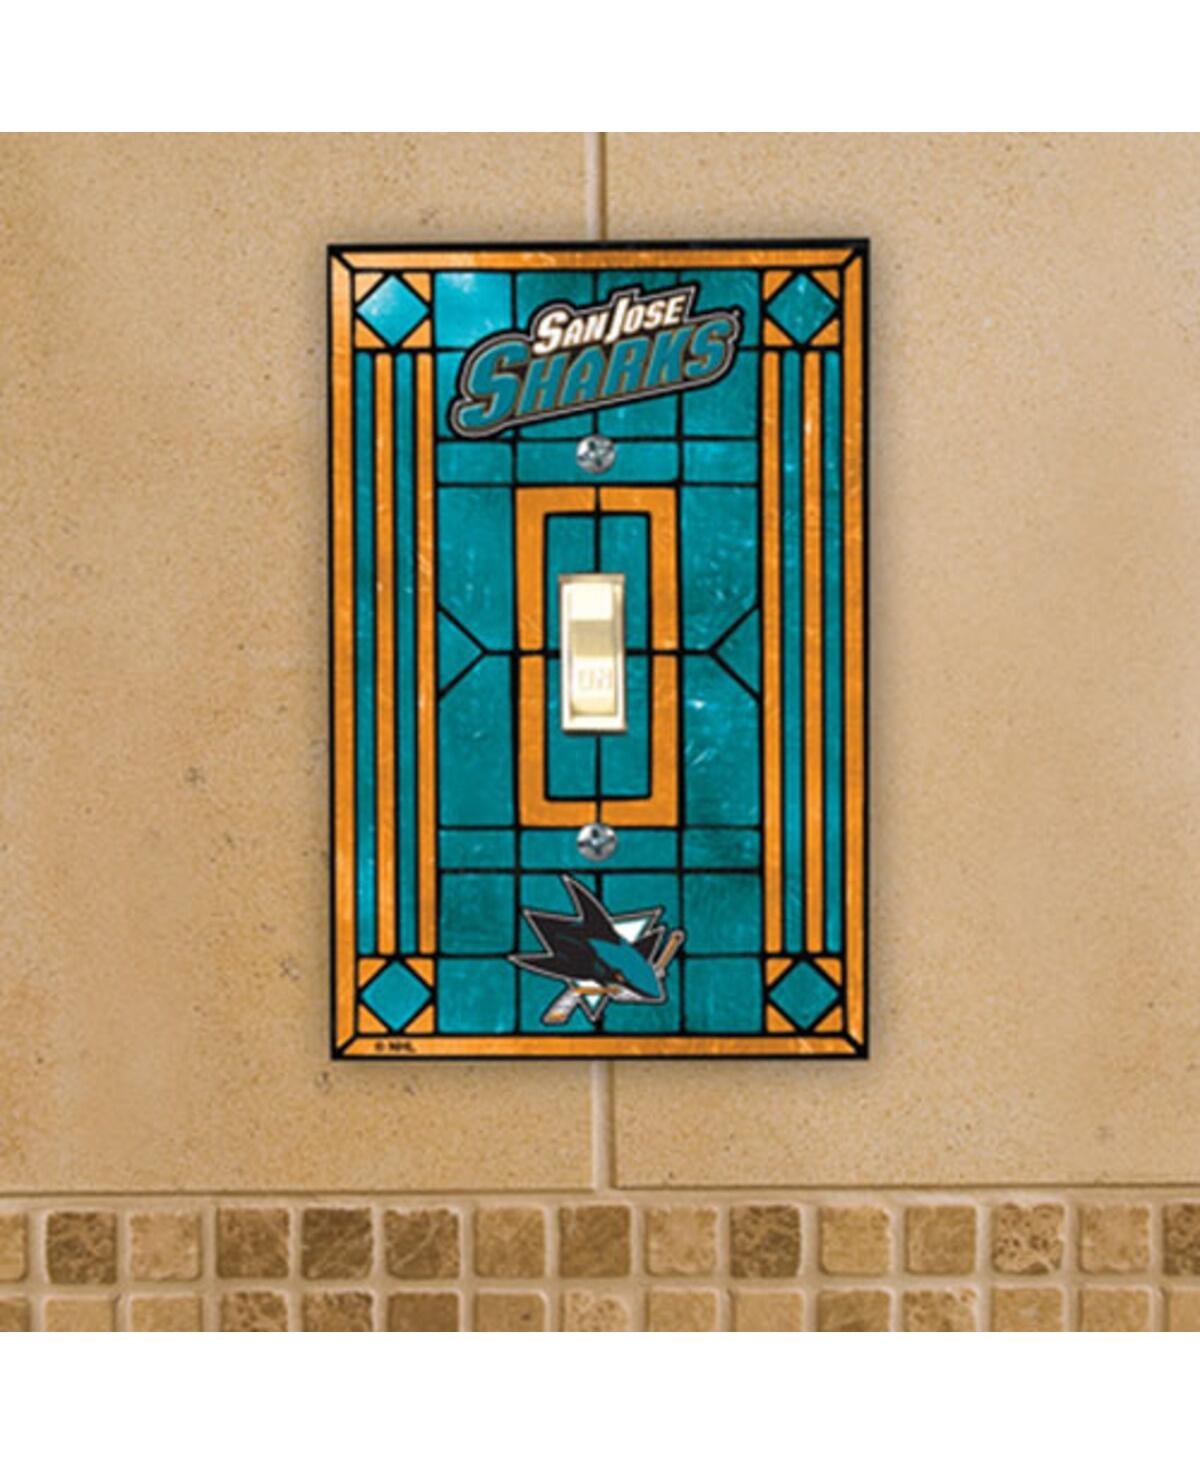 San Jose Sharks Art Glass Switch Plate Cover - Blue